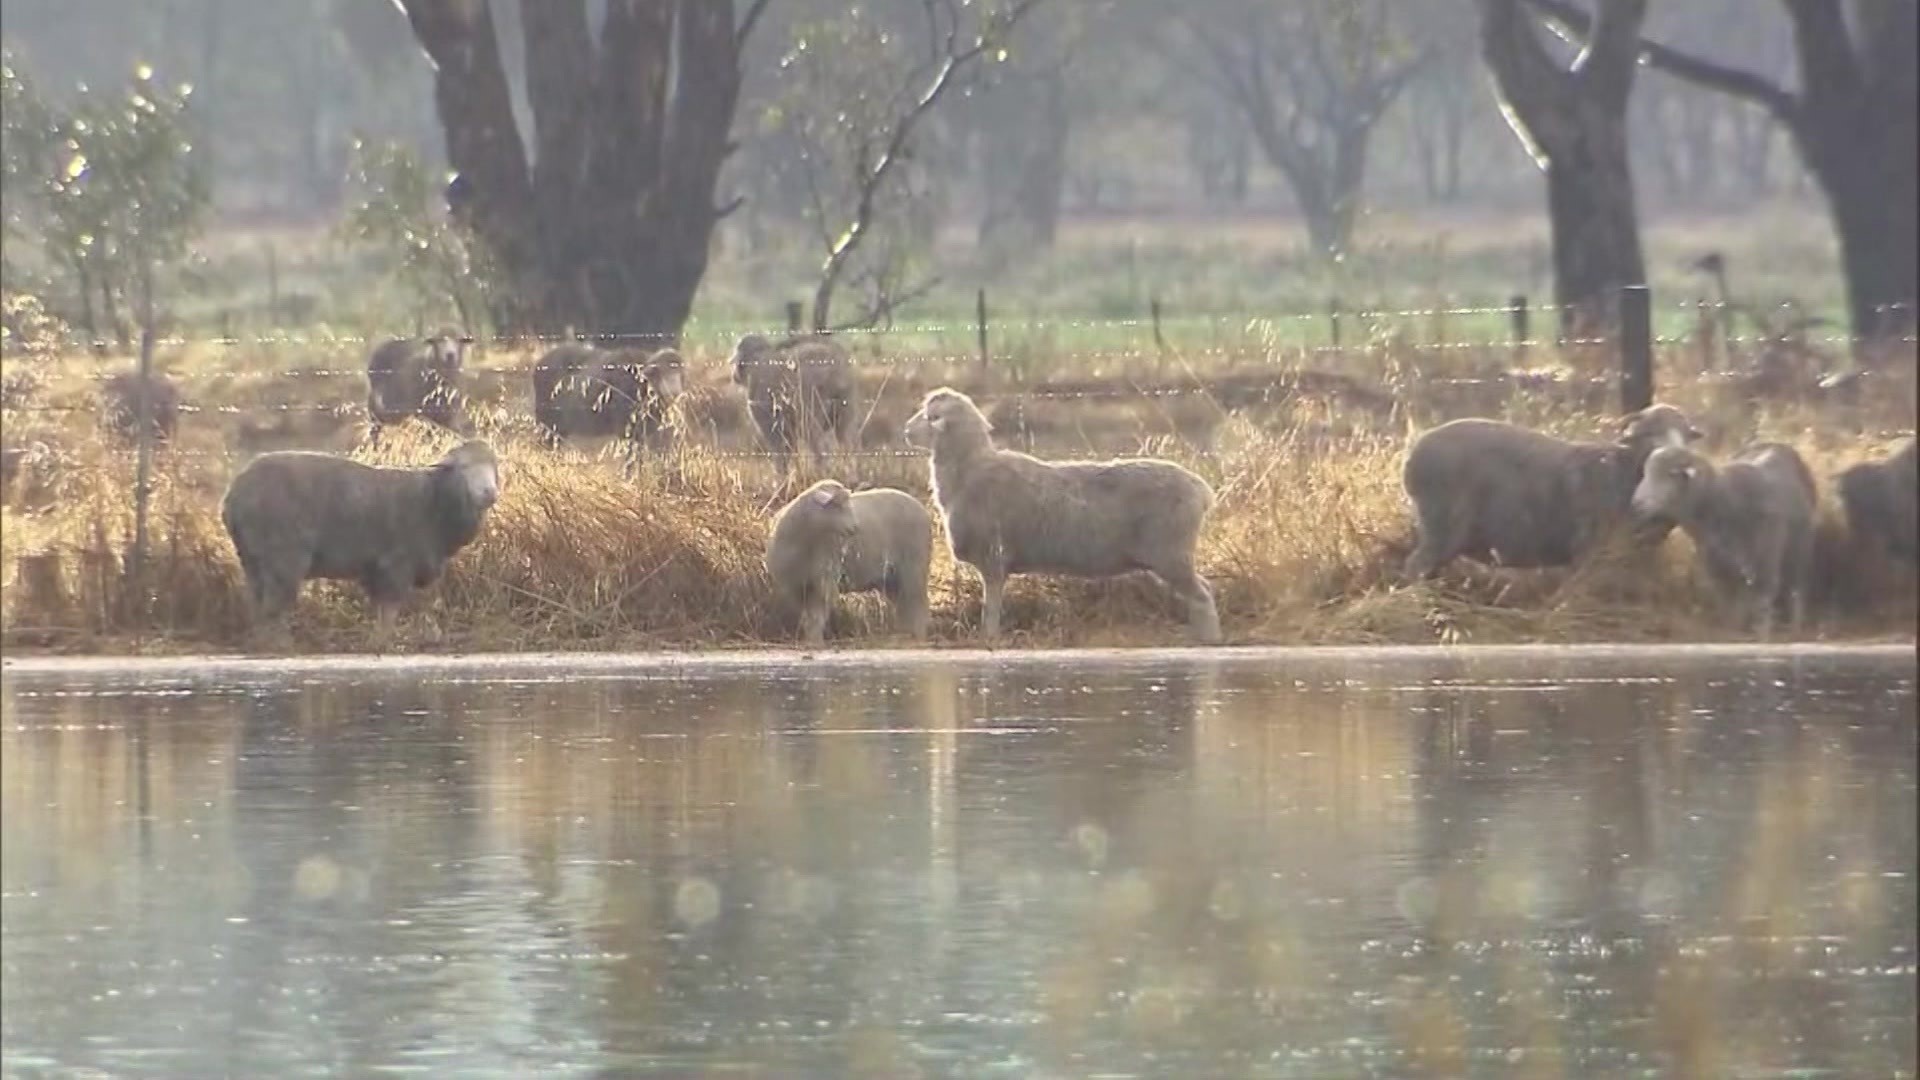 Sheep standing in flood waters.